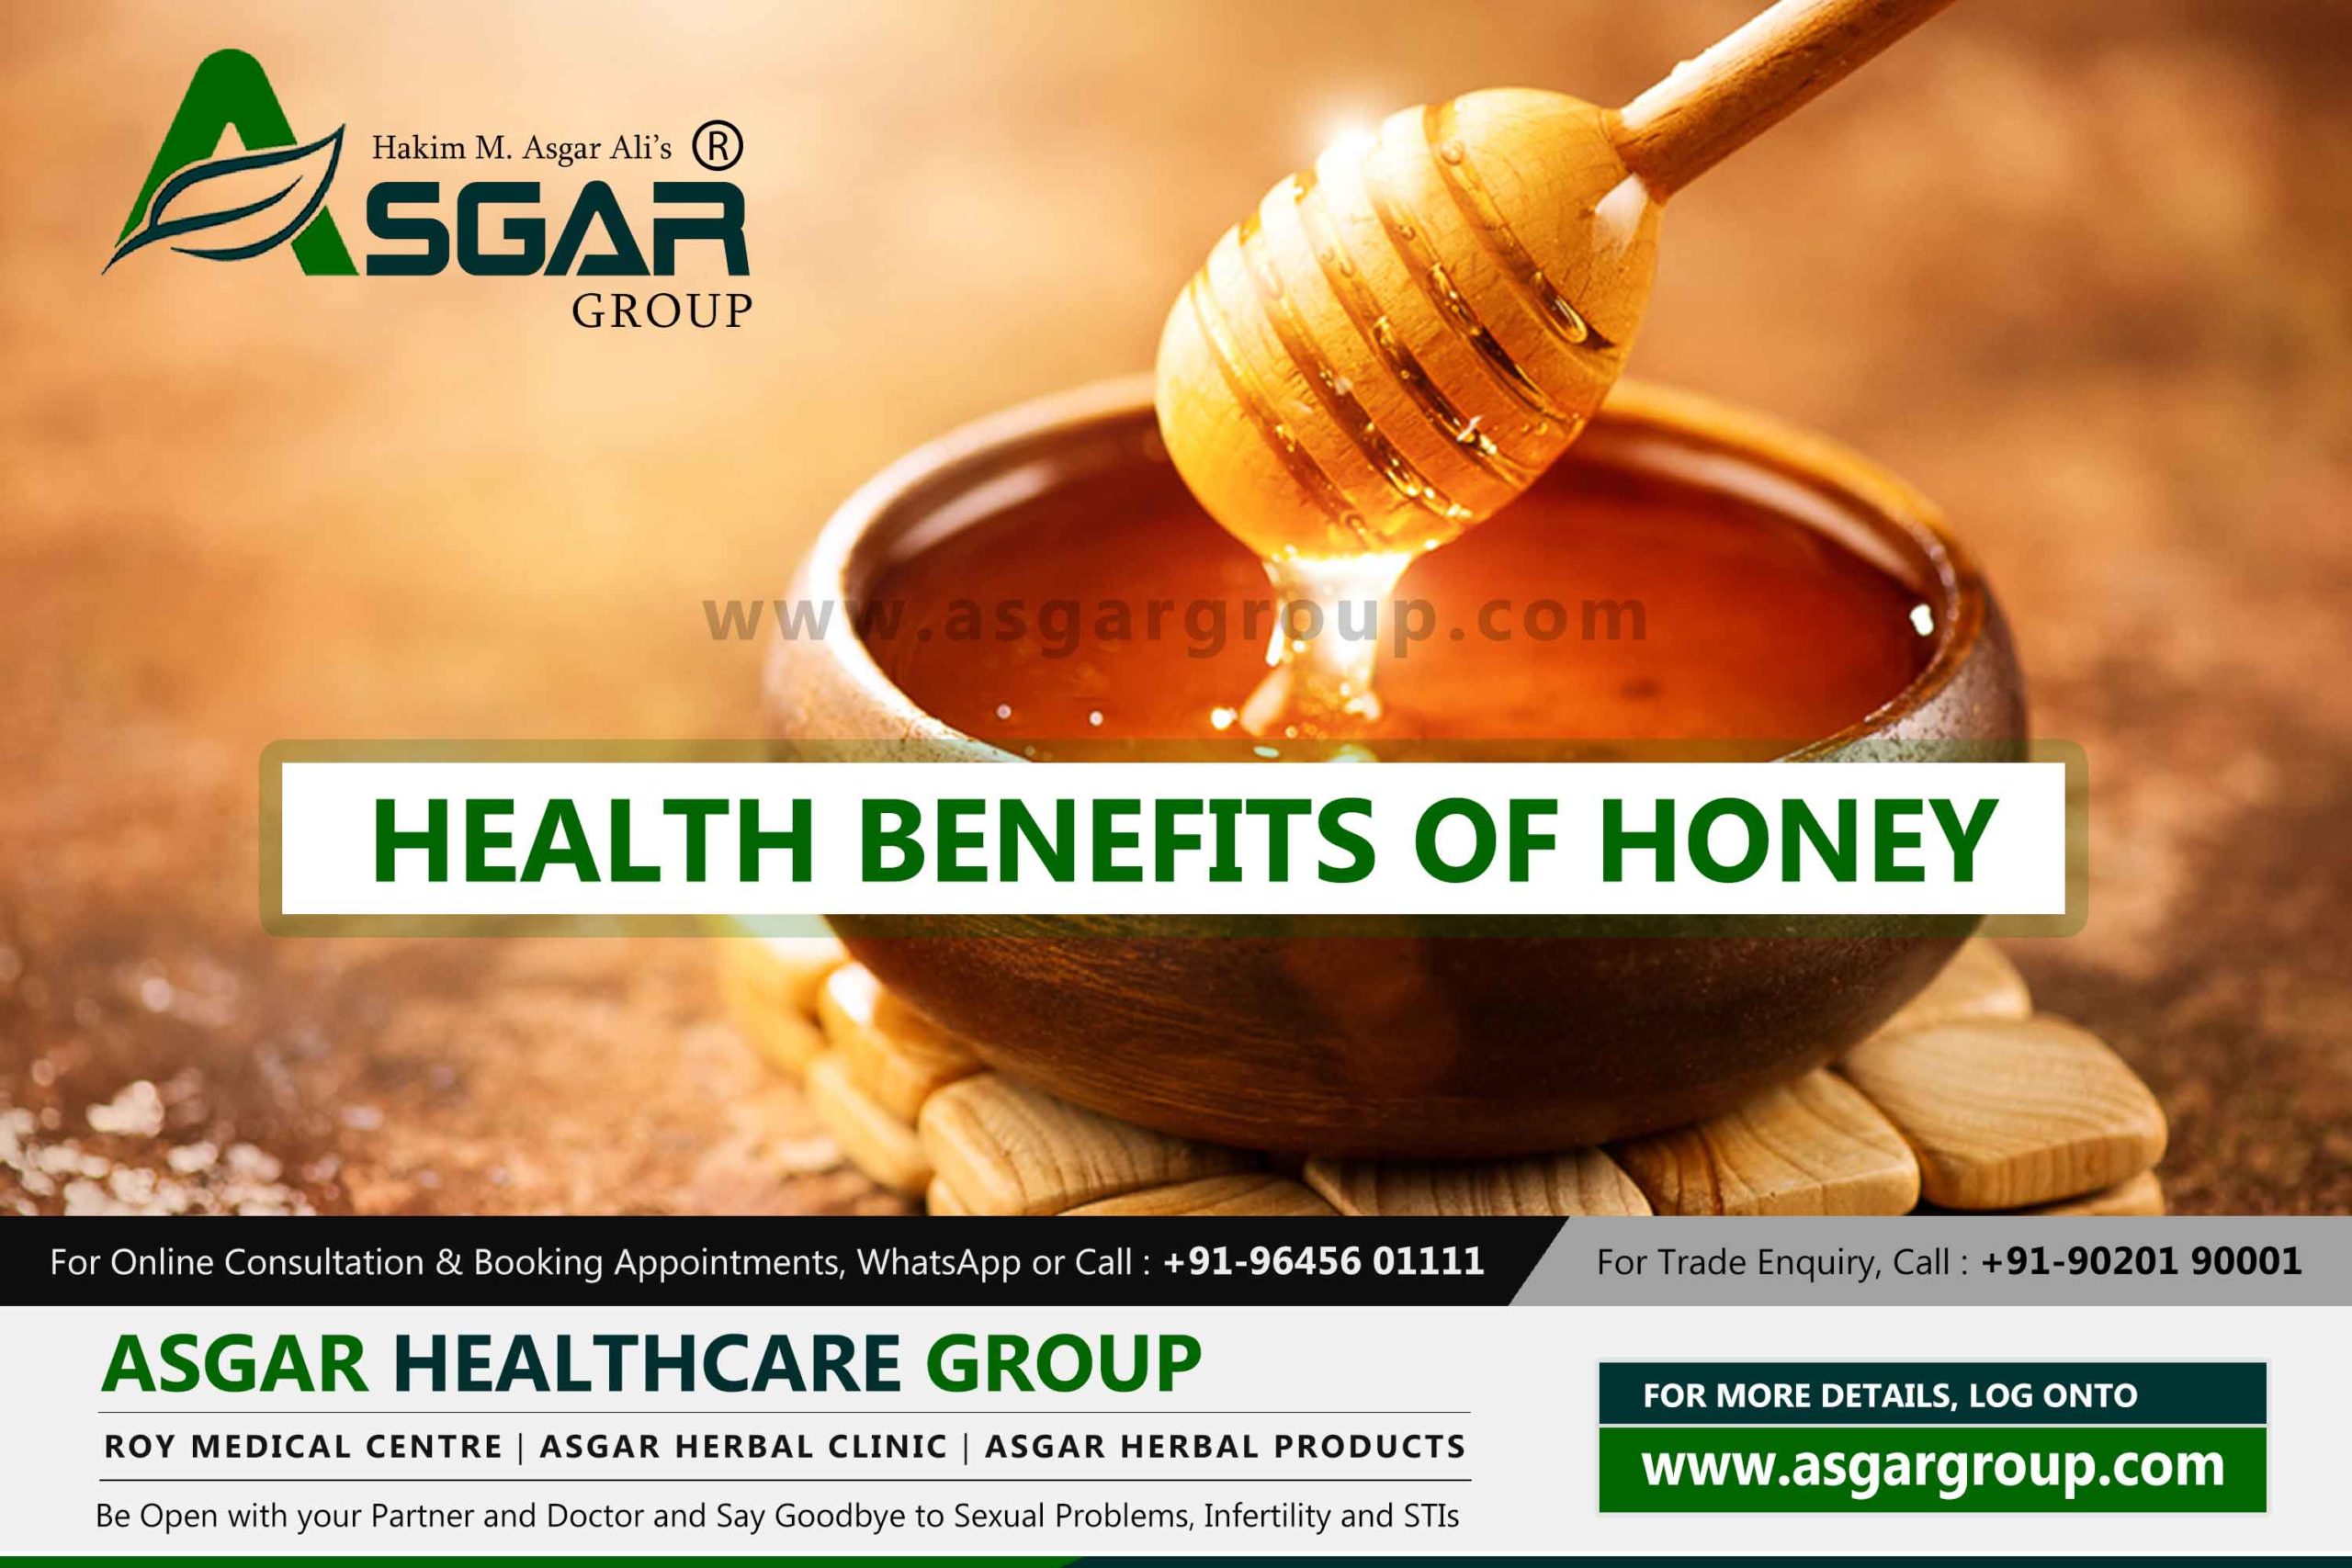 Ayurveda Medical Health Benefits of Honey Ginger Garlic Roy Medical Centre Kerala Asgar Herbal Tamilnadu Asgar Healthcare Group India scaled